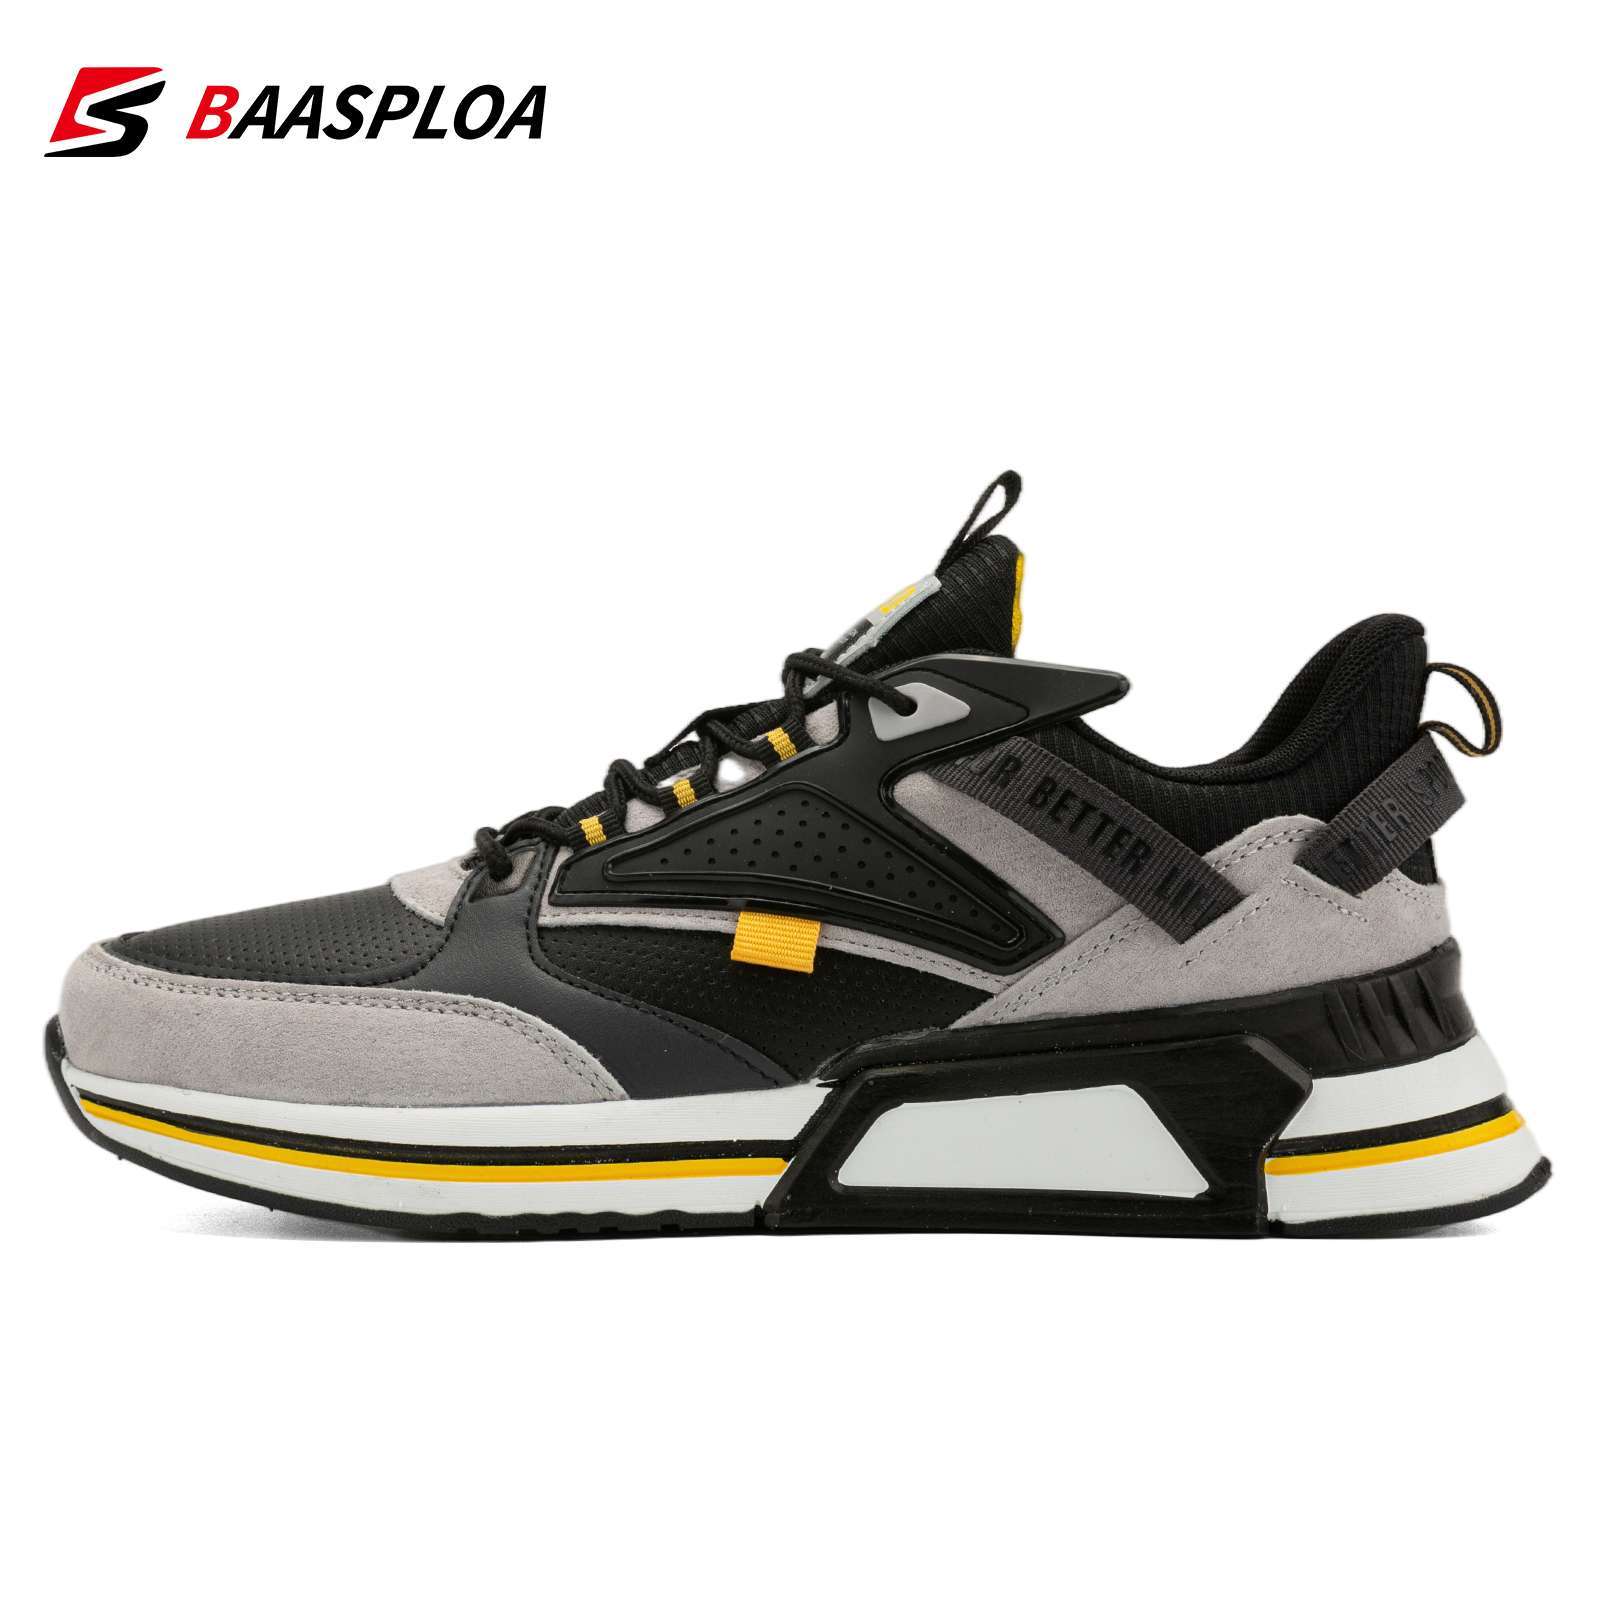 Baasploa New Men Shoes Comfortable Walking Shoes High Quality Fashion Men Sneakers Non slip Breathable Male 3